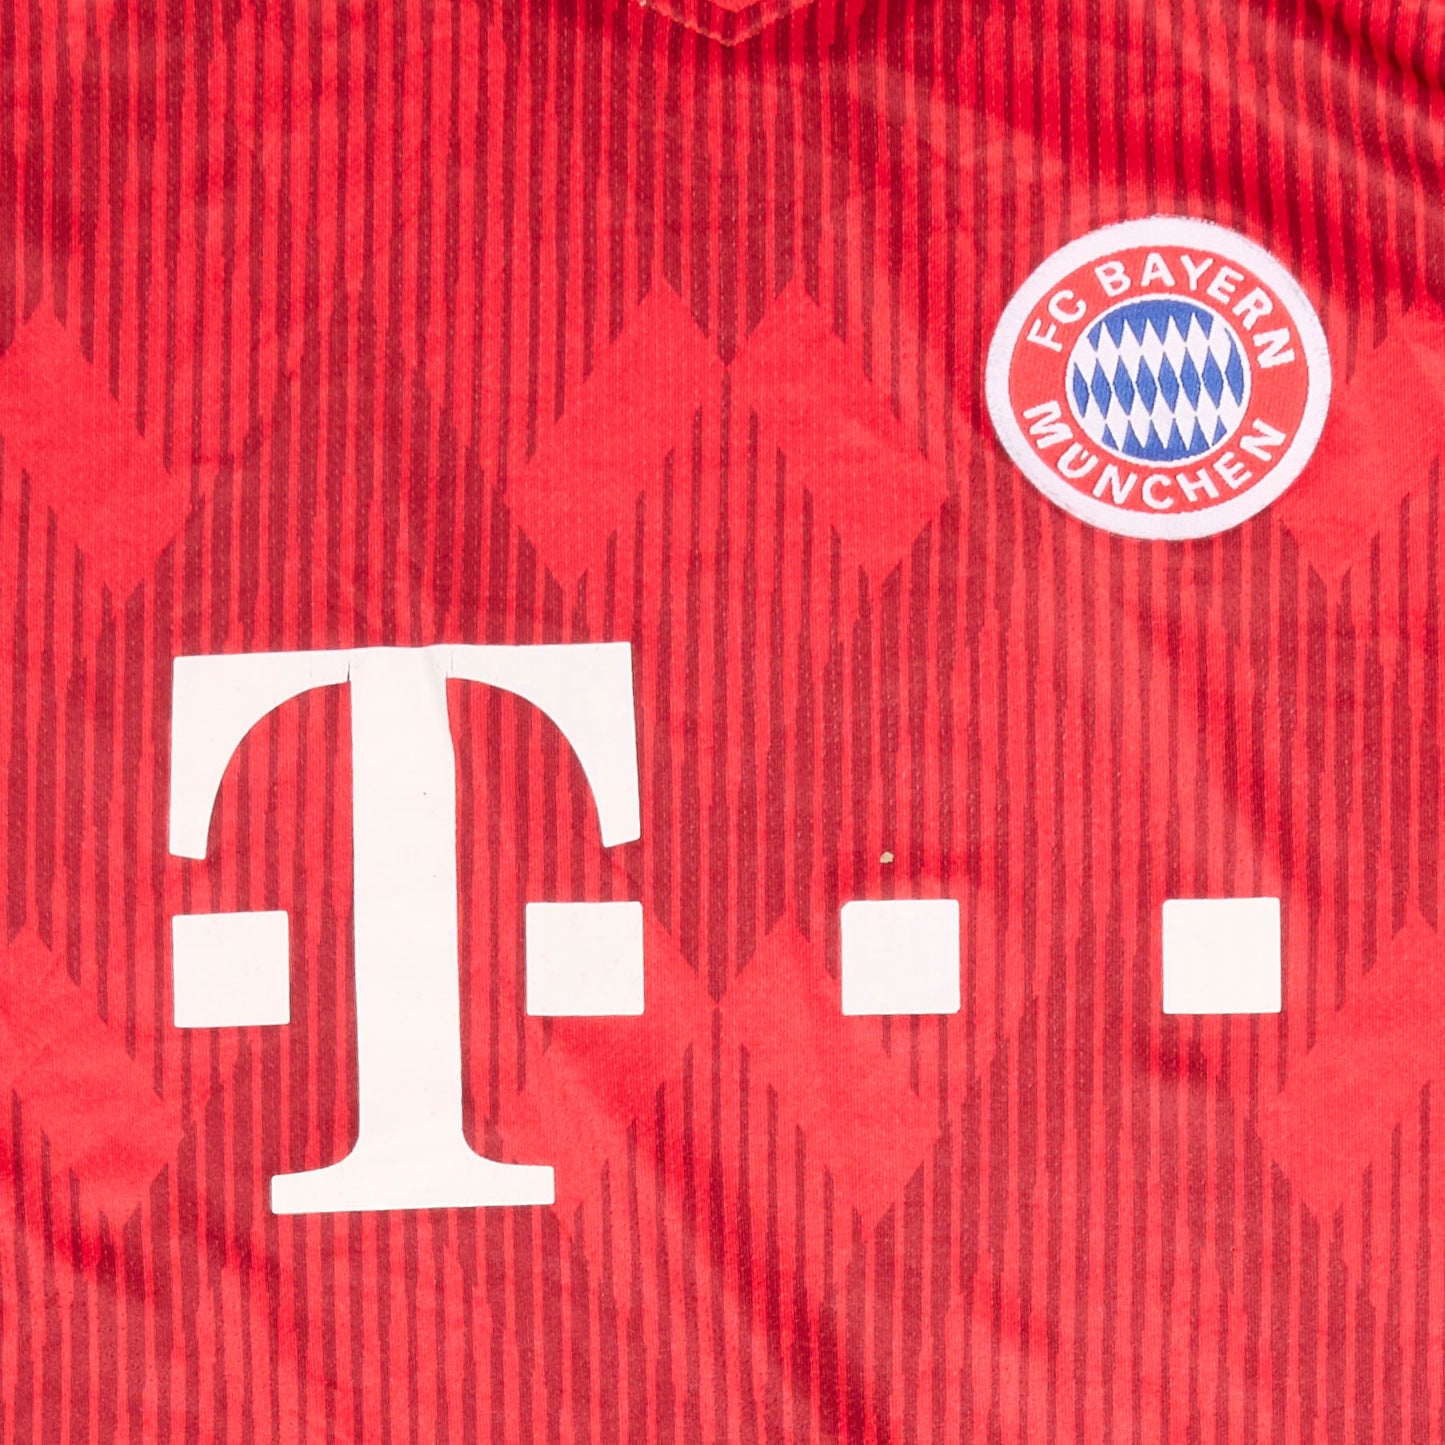 Bayern Munich Longsleeve Football Shirt - L